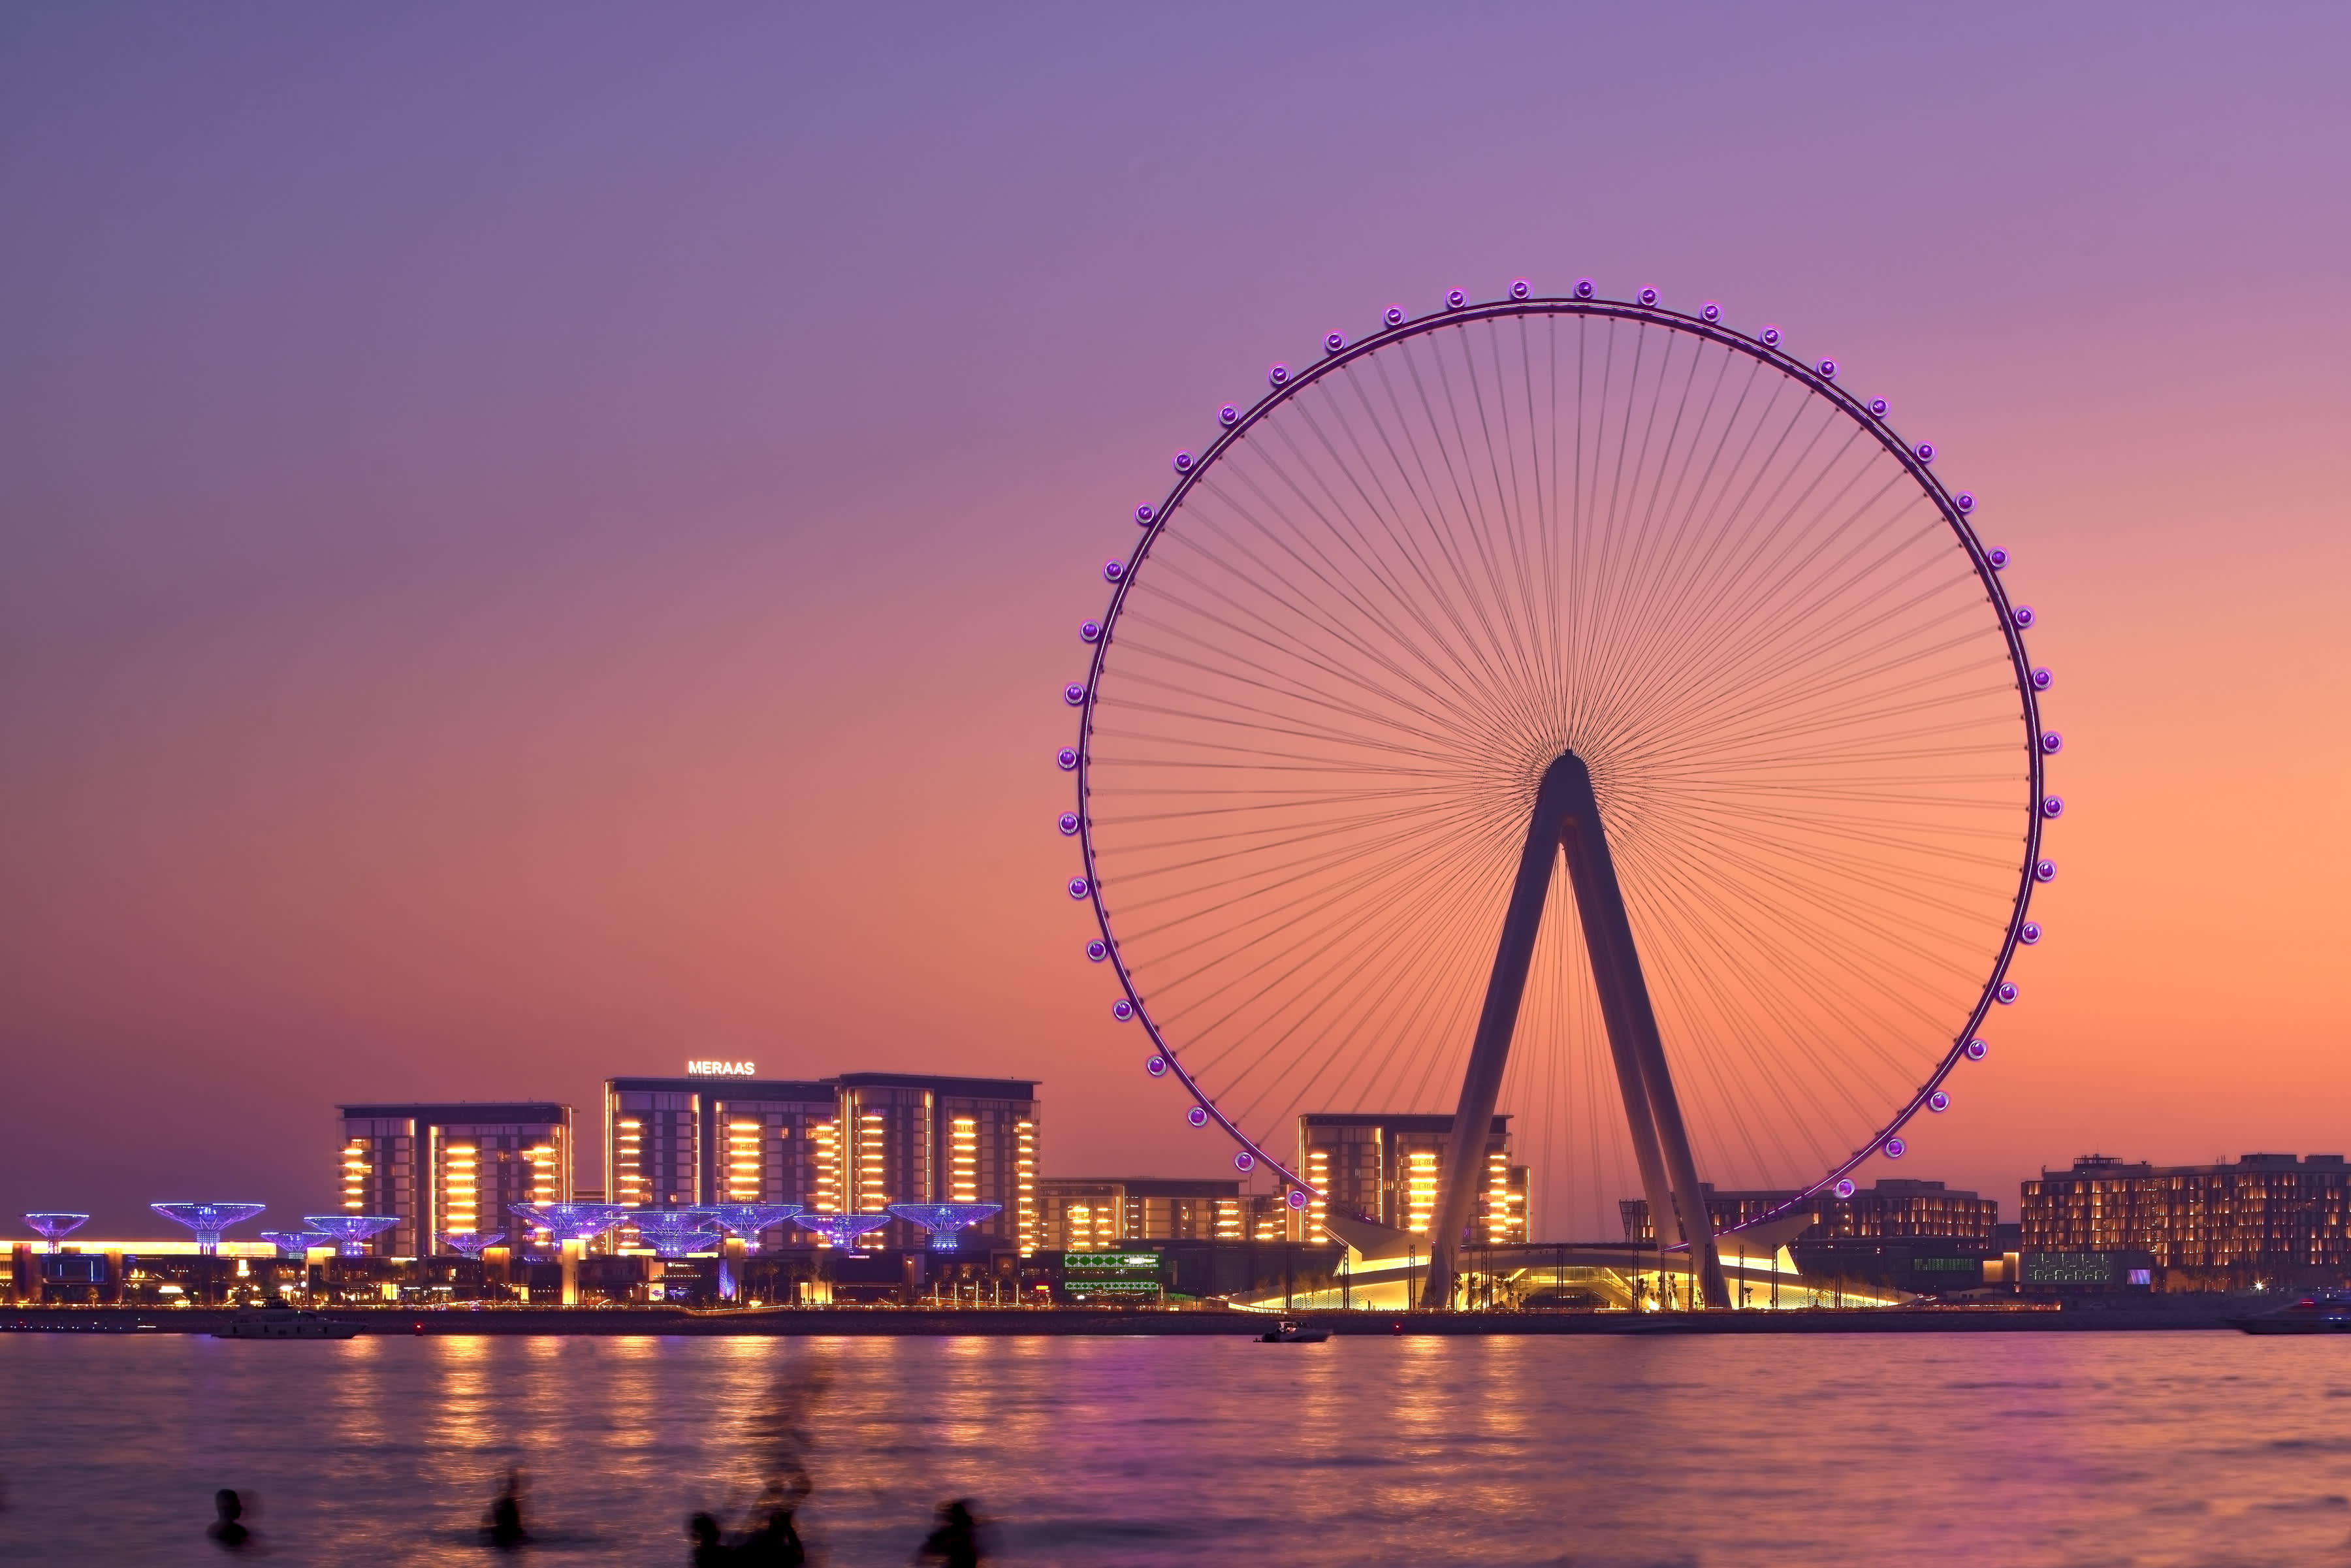 Ain Dubai, the world's largest ferris wheel, is opening in Dubai